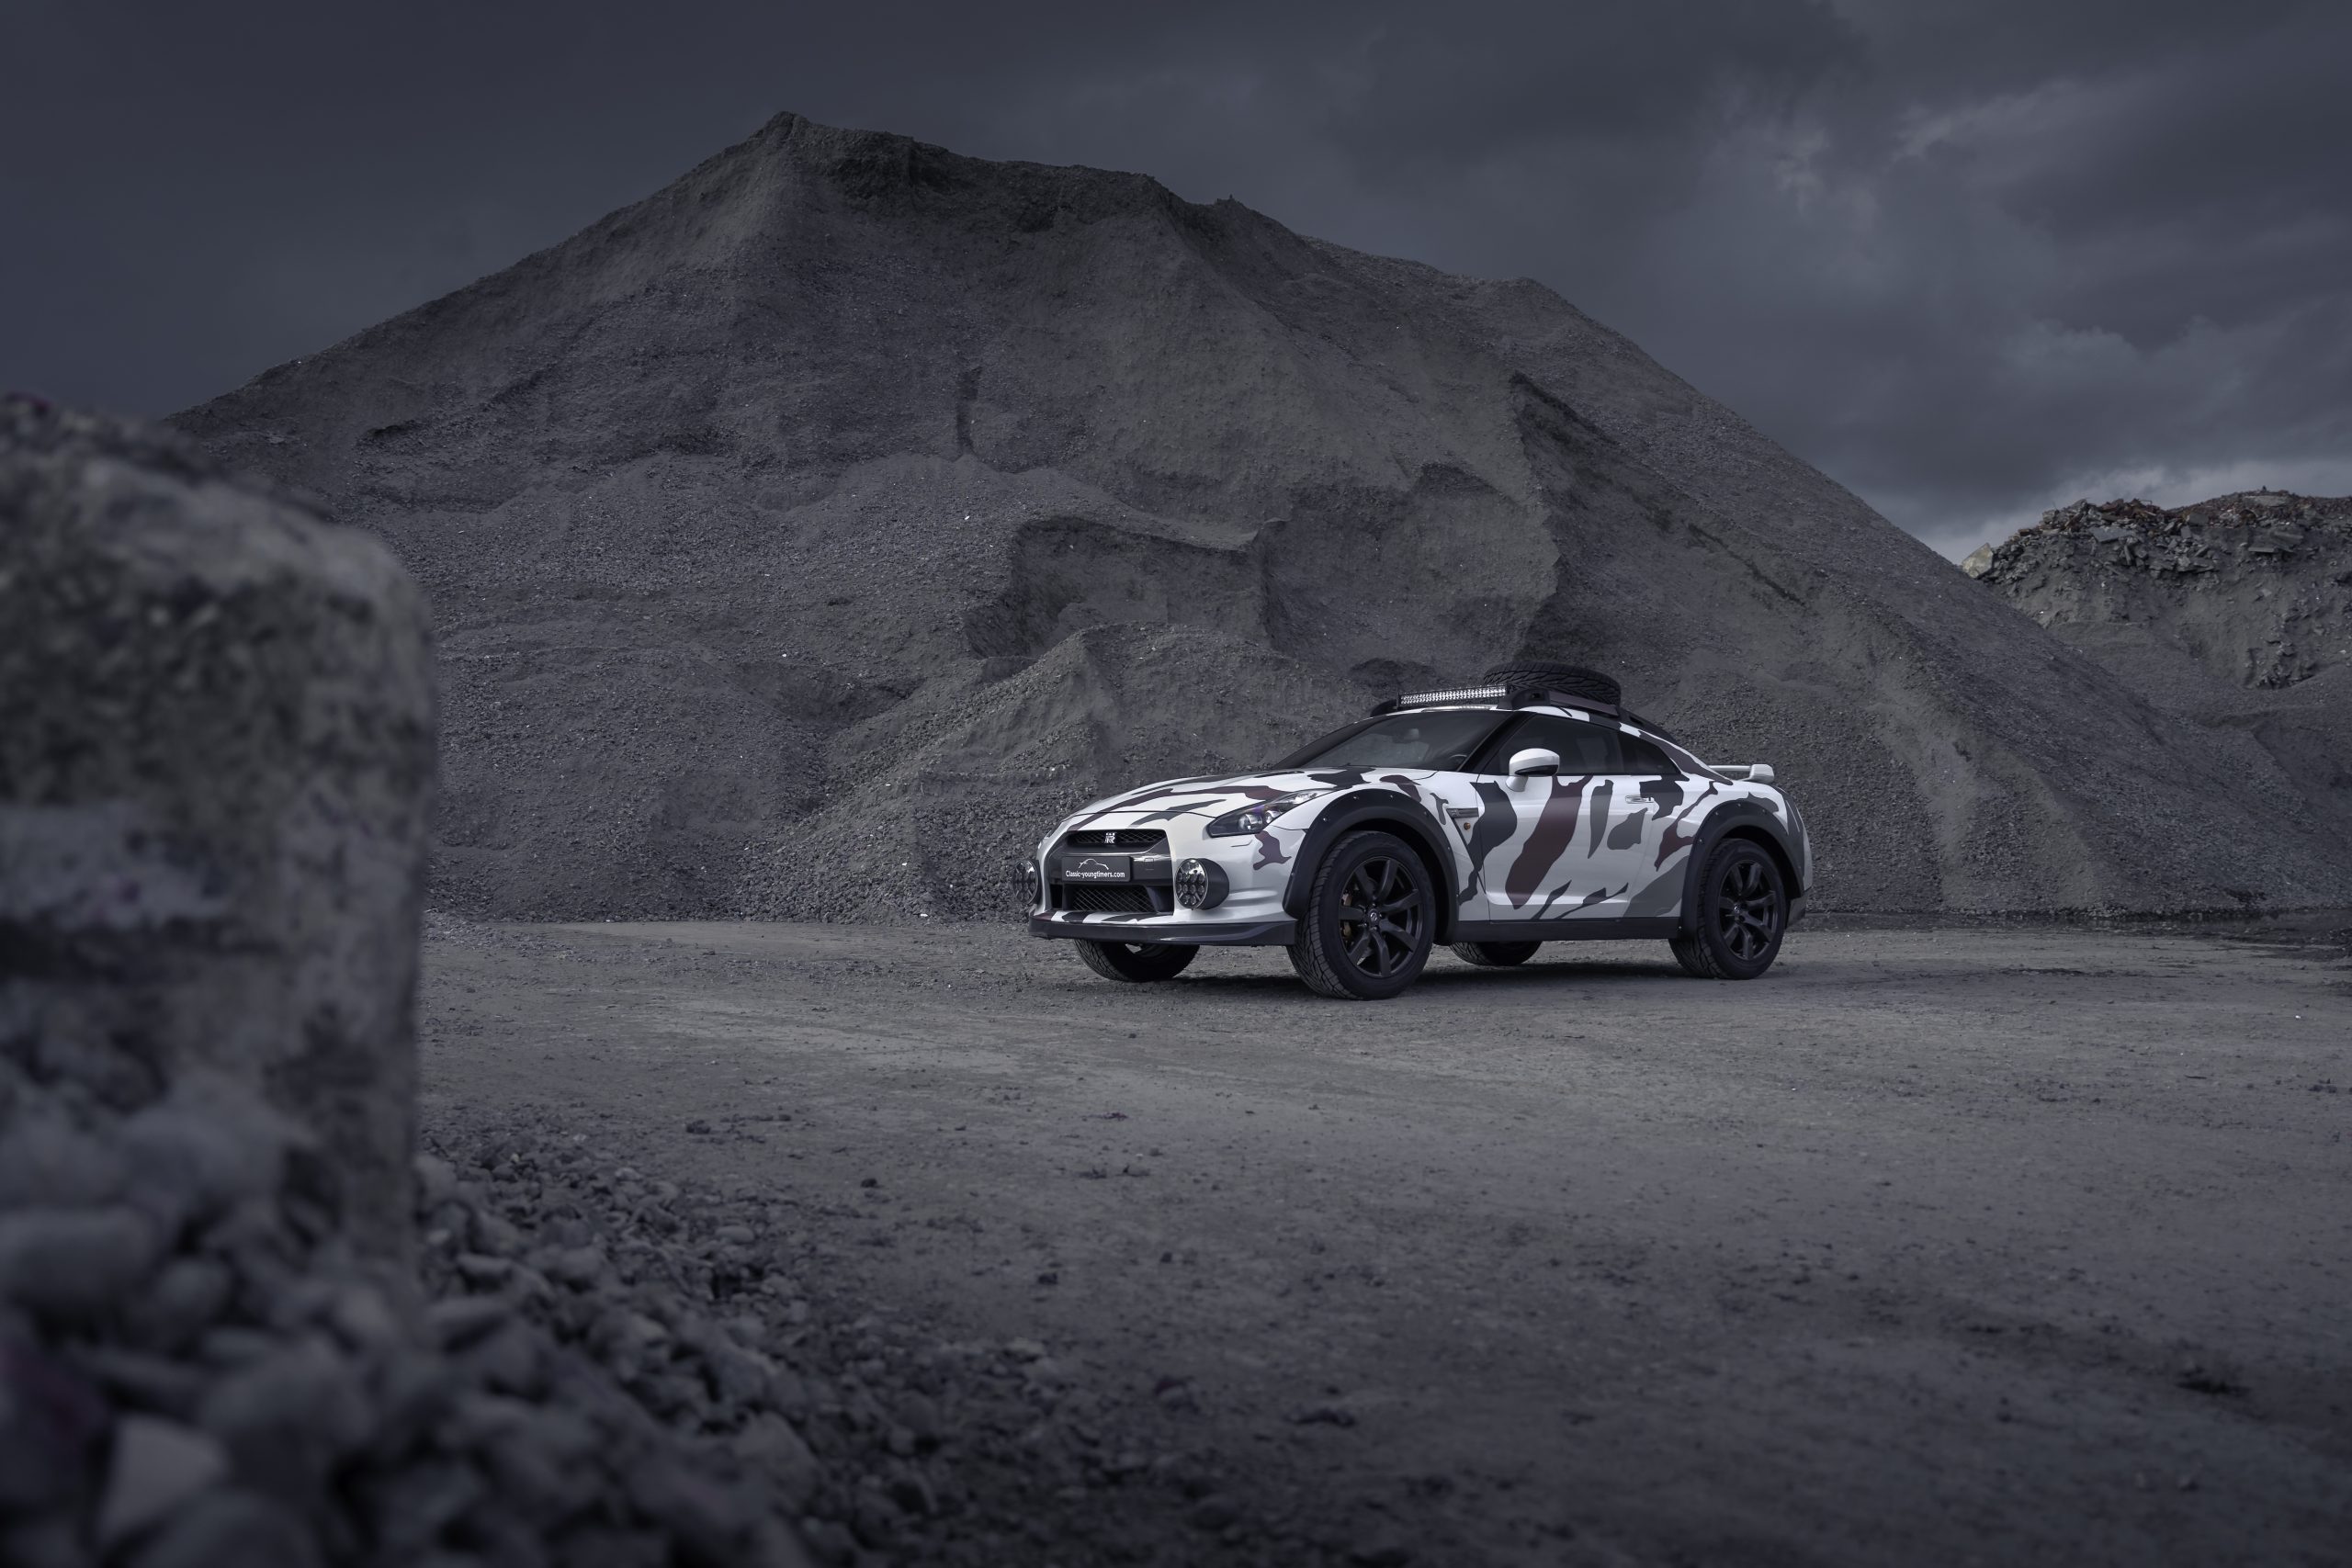 Godzilla goes off road: custom GT-R hits the dirt